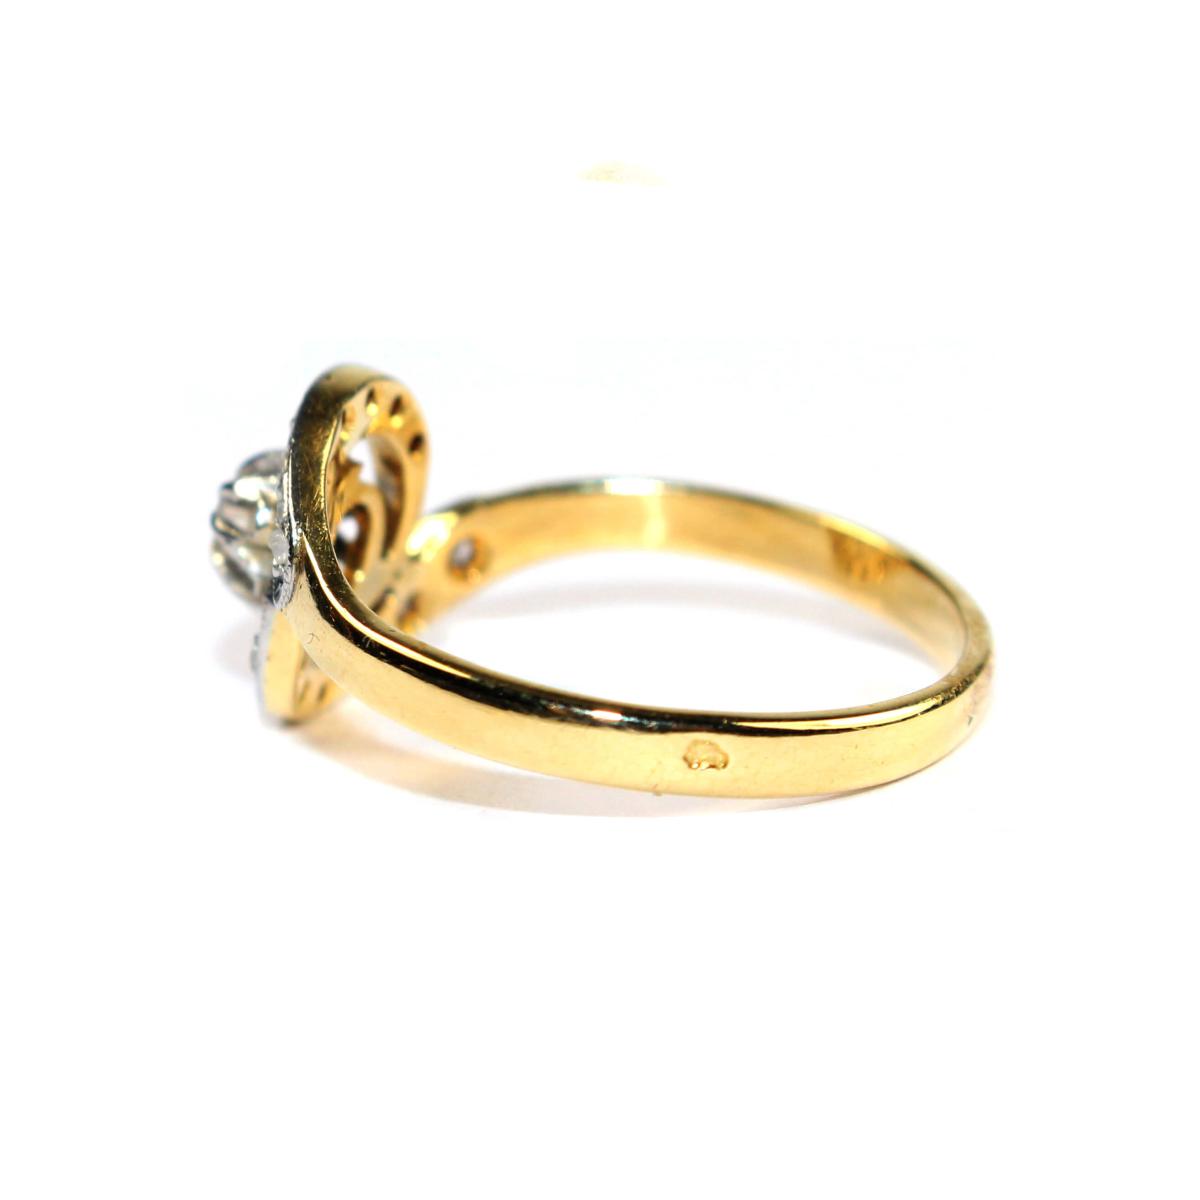 Edwardian Diamond Swirl Ring; French circa 1920